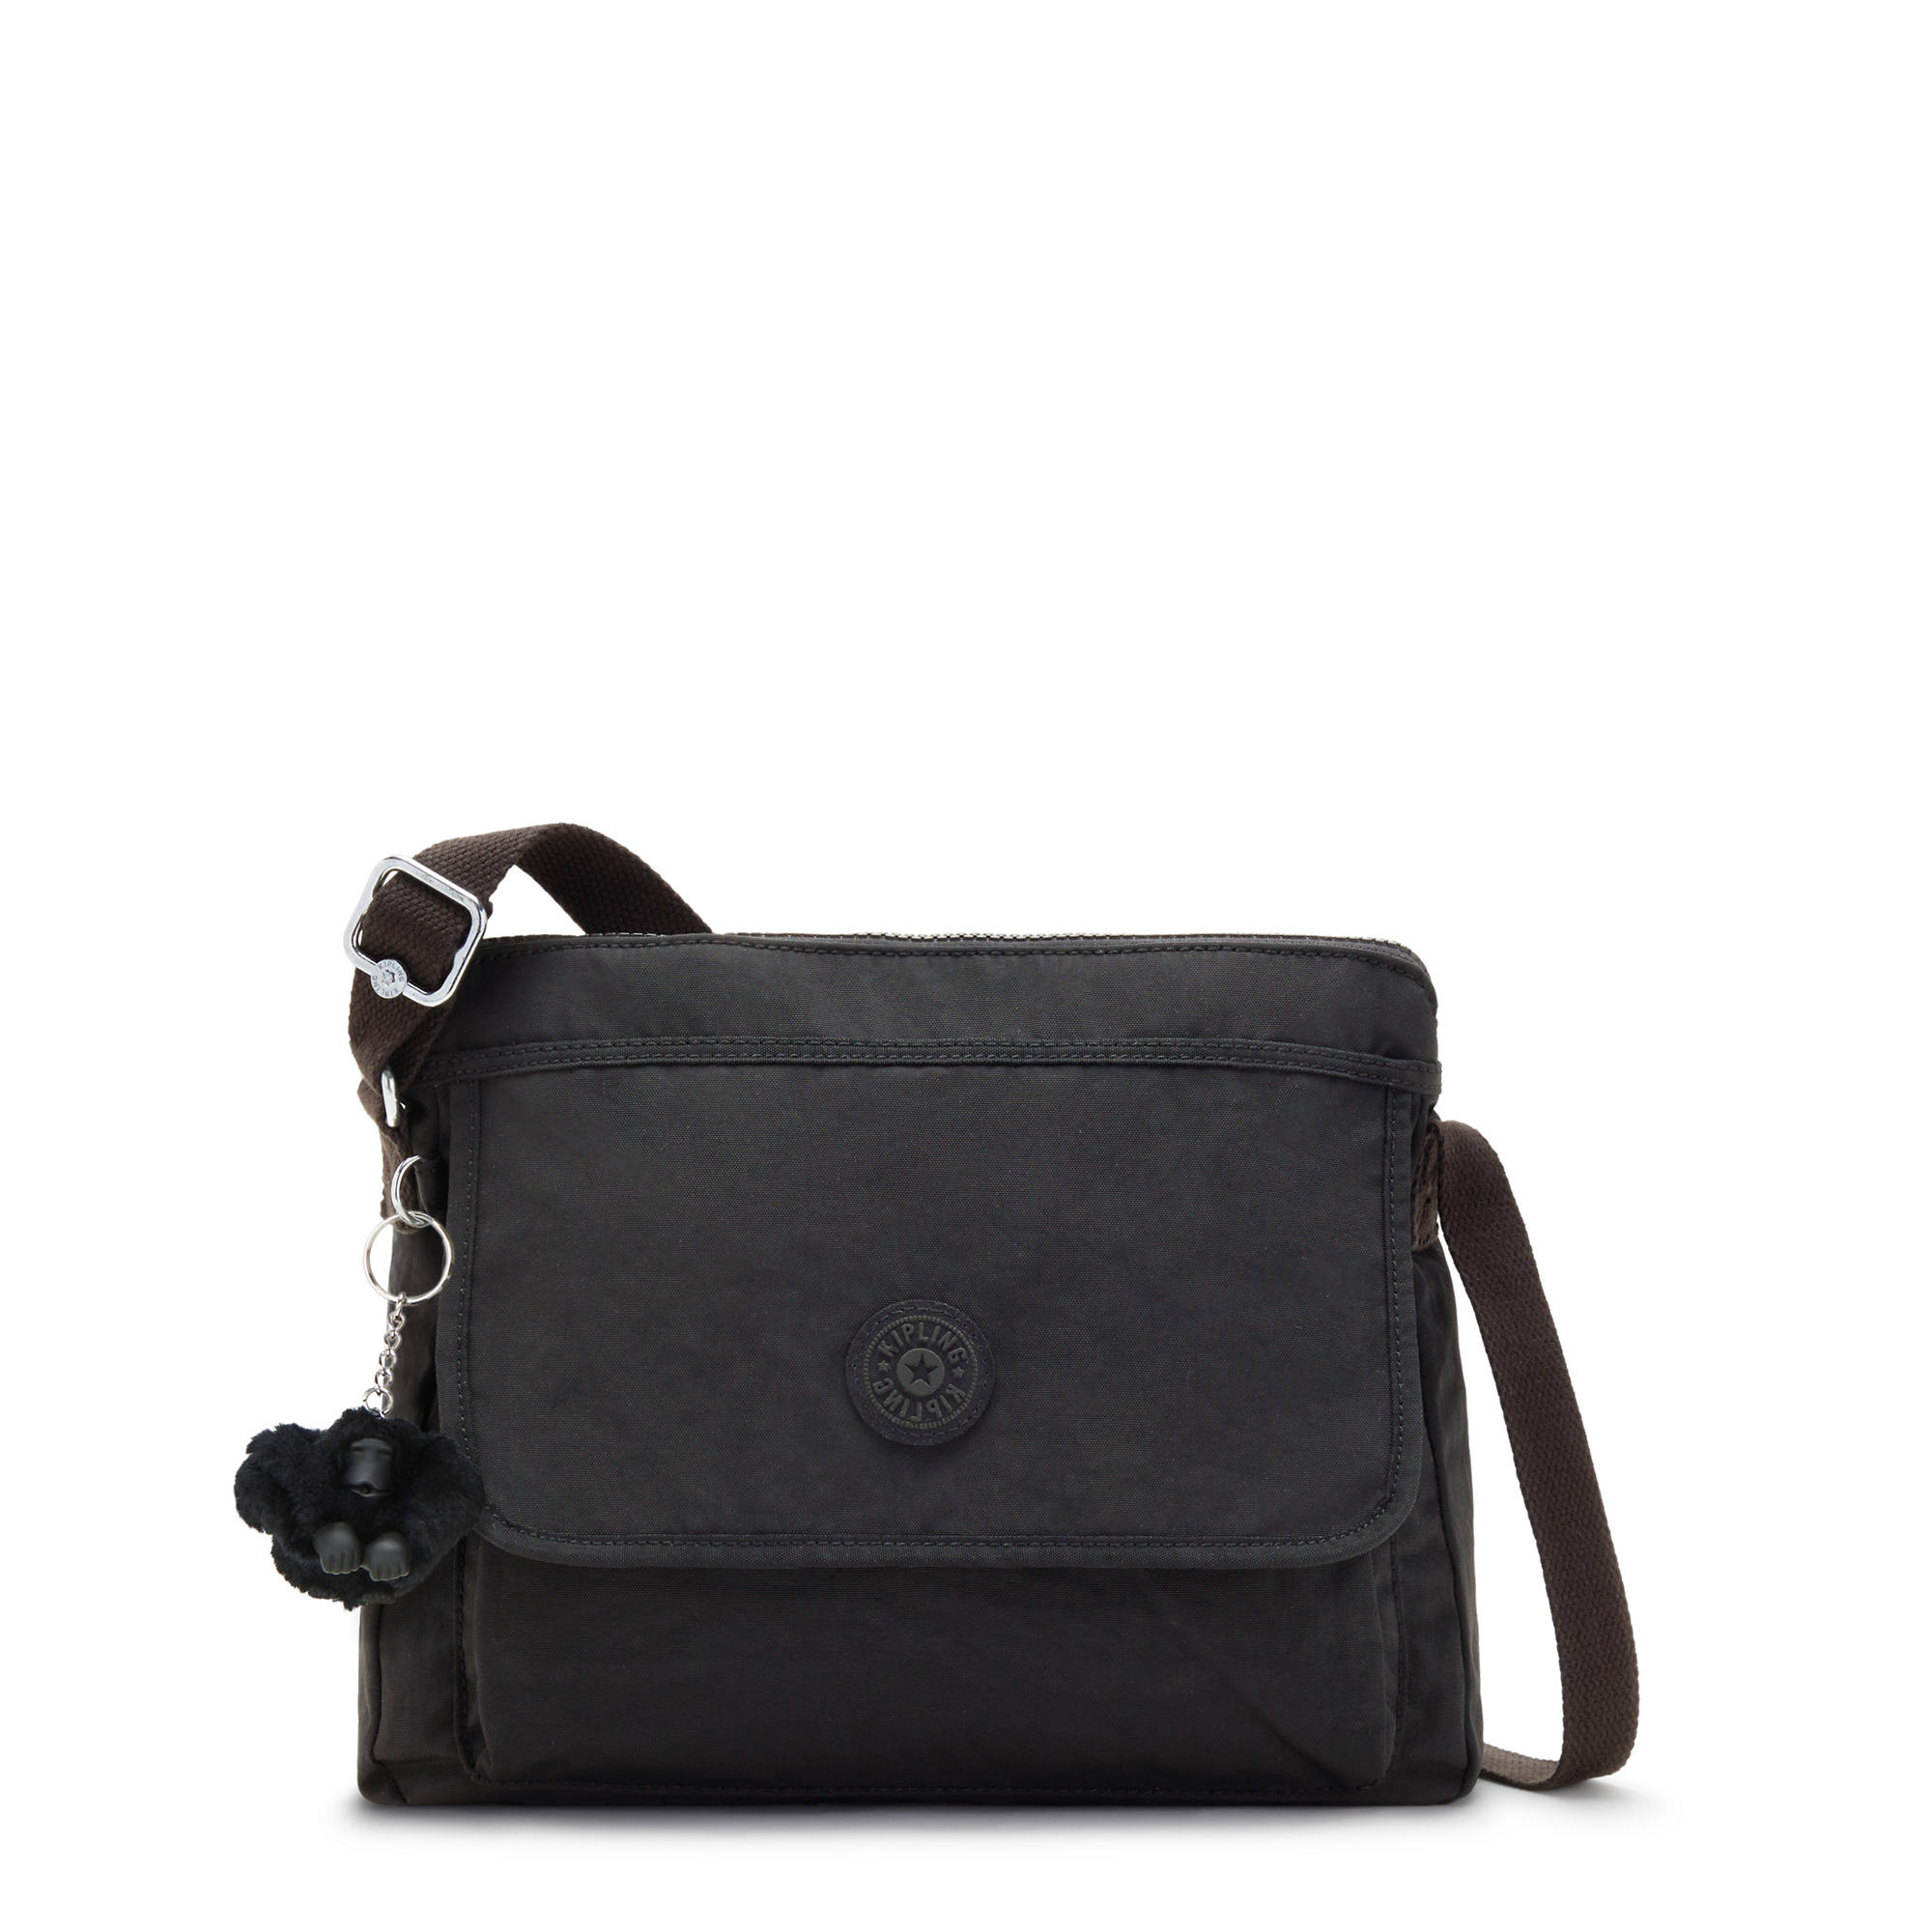 Kipling Women's Aisling Crossbody Bag with Adjustable Strap | eBay